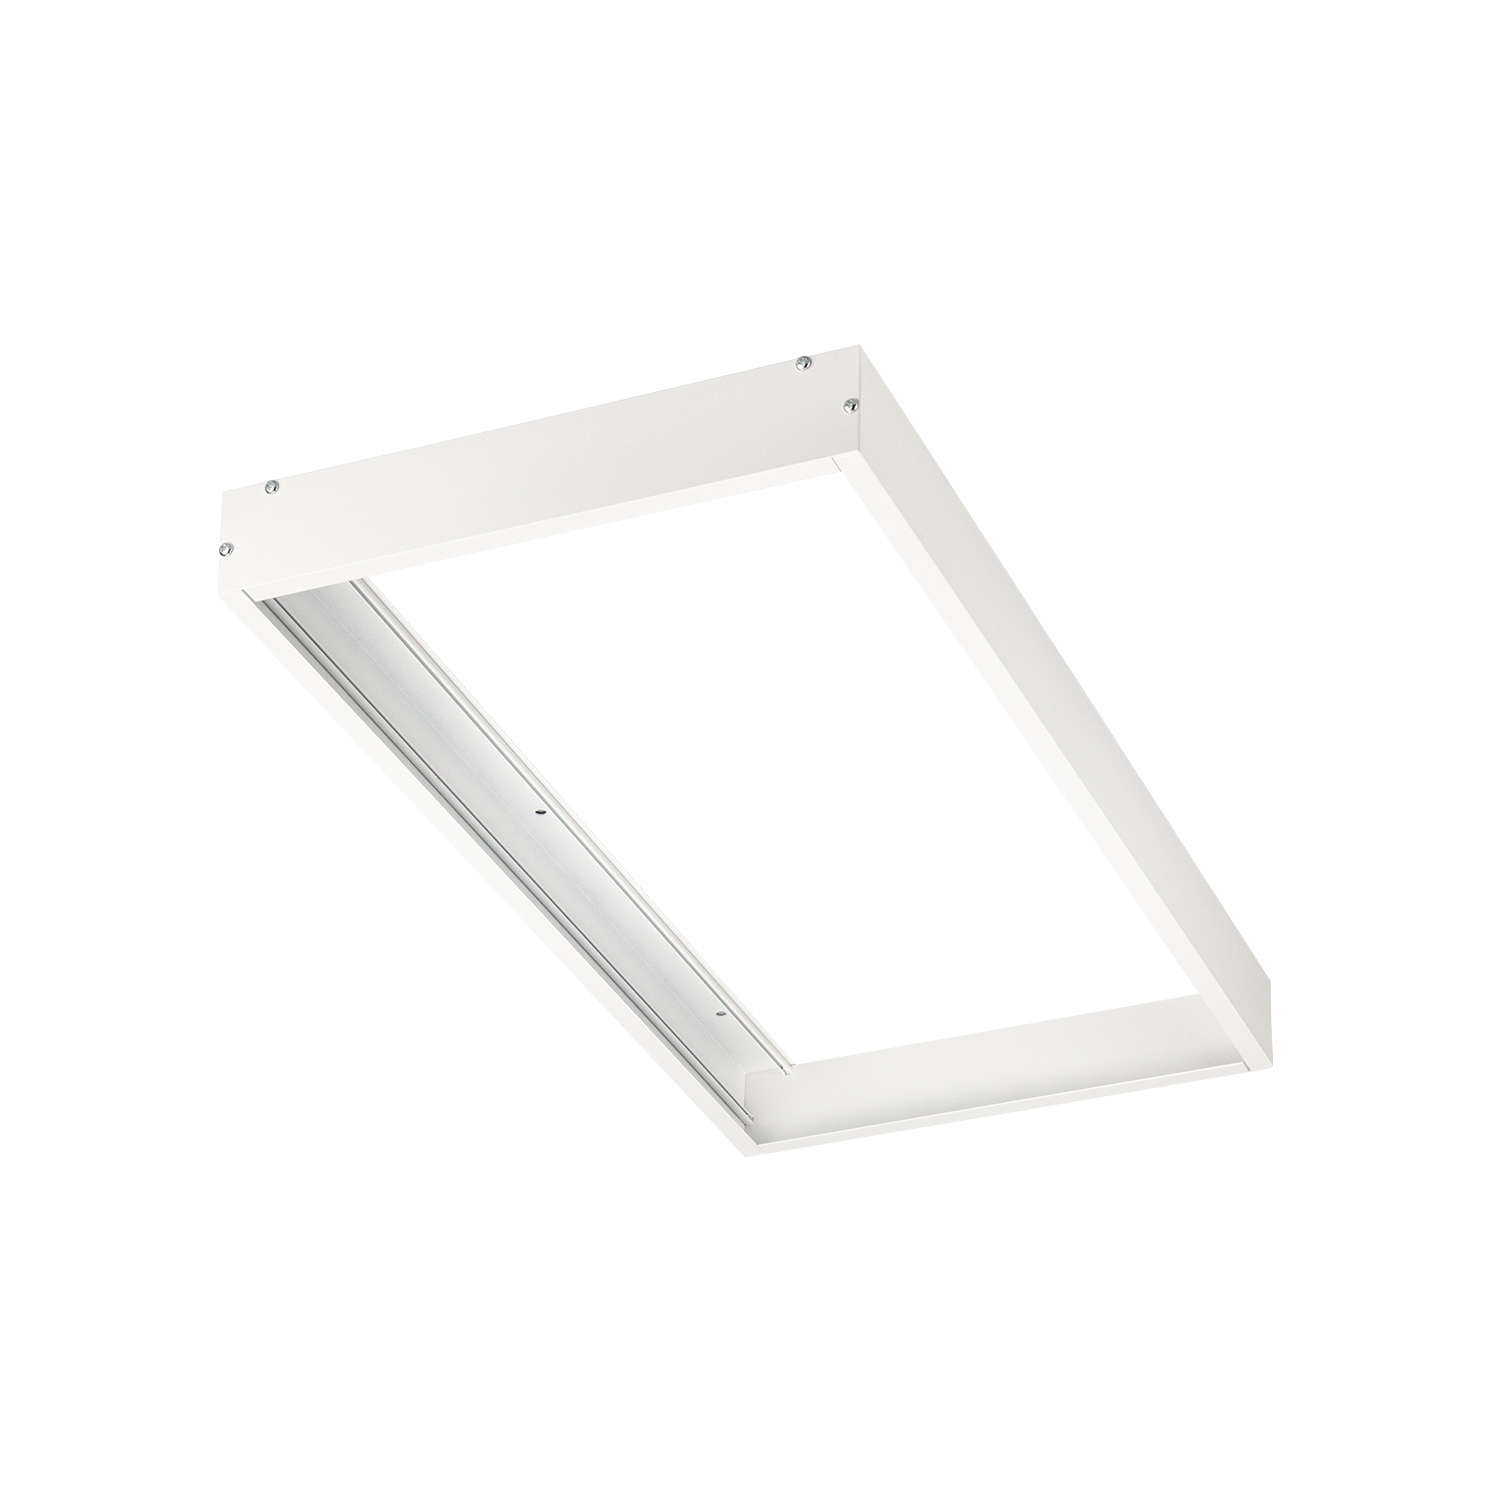 Marco aluminio superficie para panel LED blanco 300*600mm